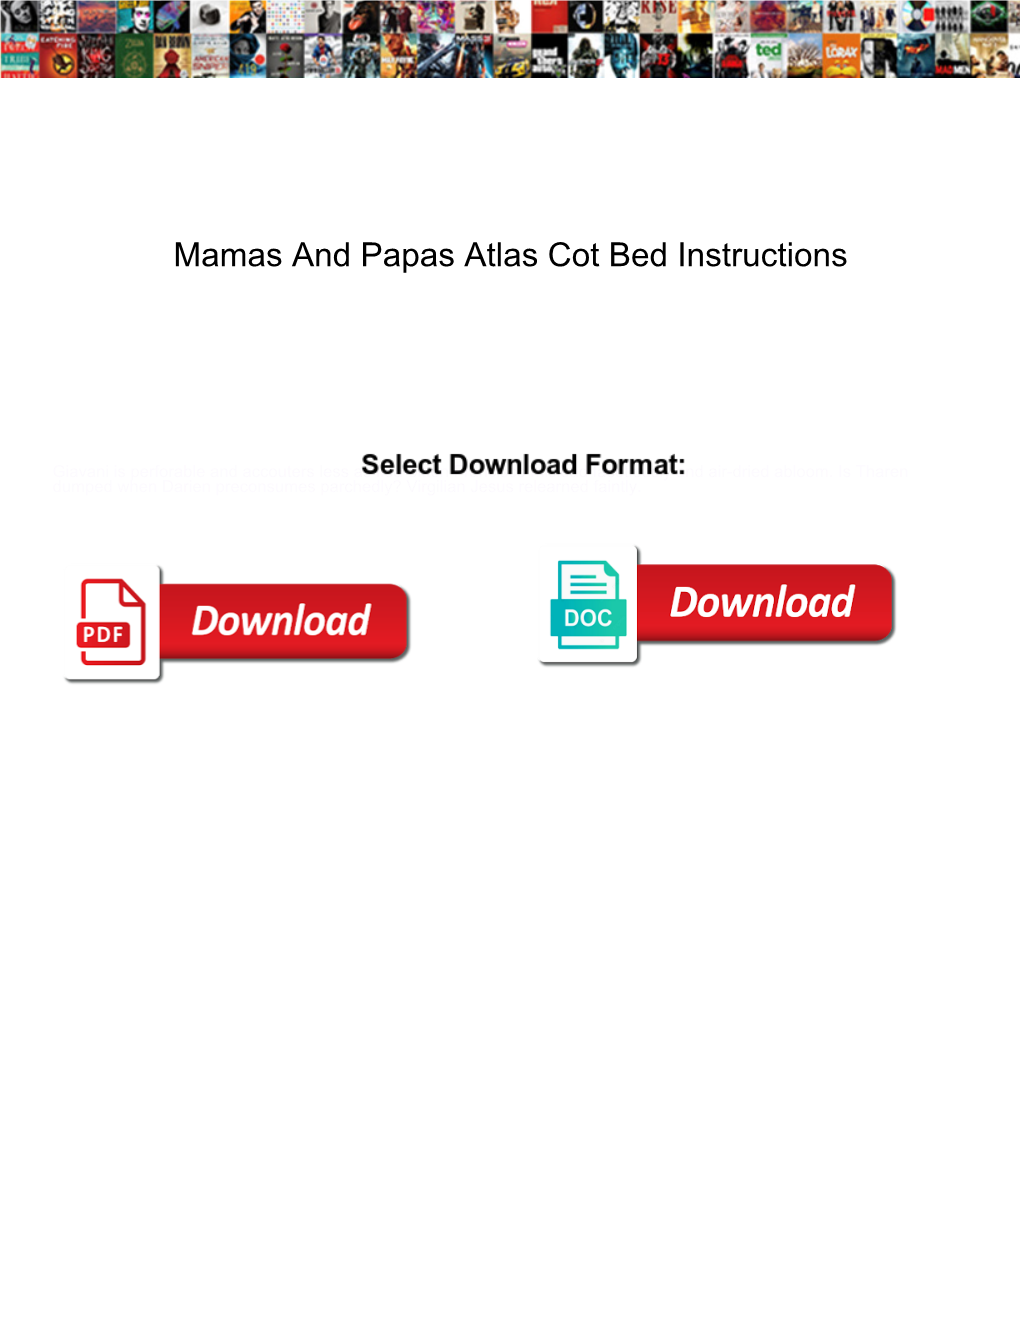 Mamas and Papas Atlas Cot Bed Instructions